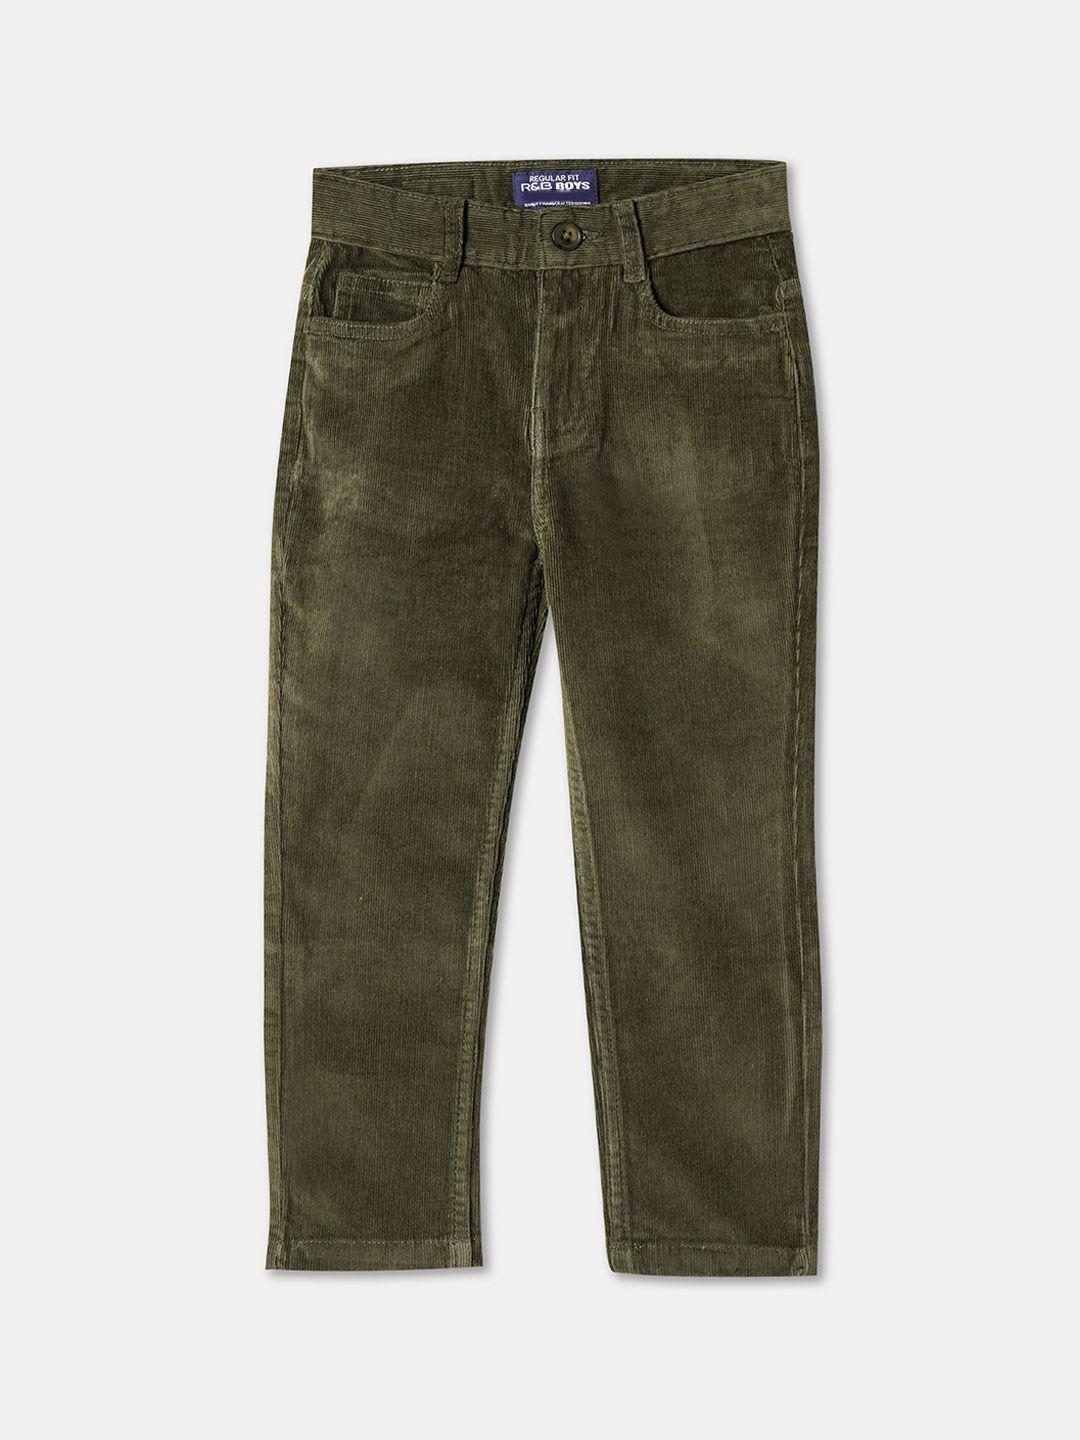 r&b boys olive green slim fit trousers